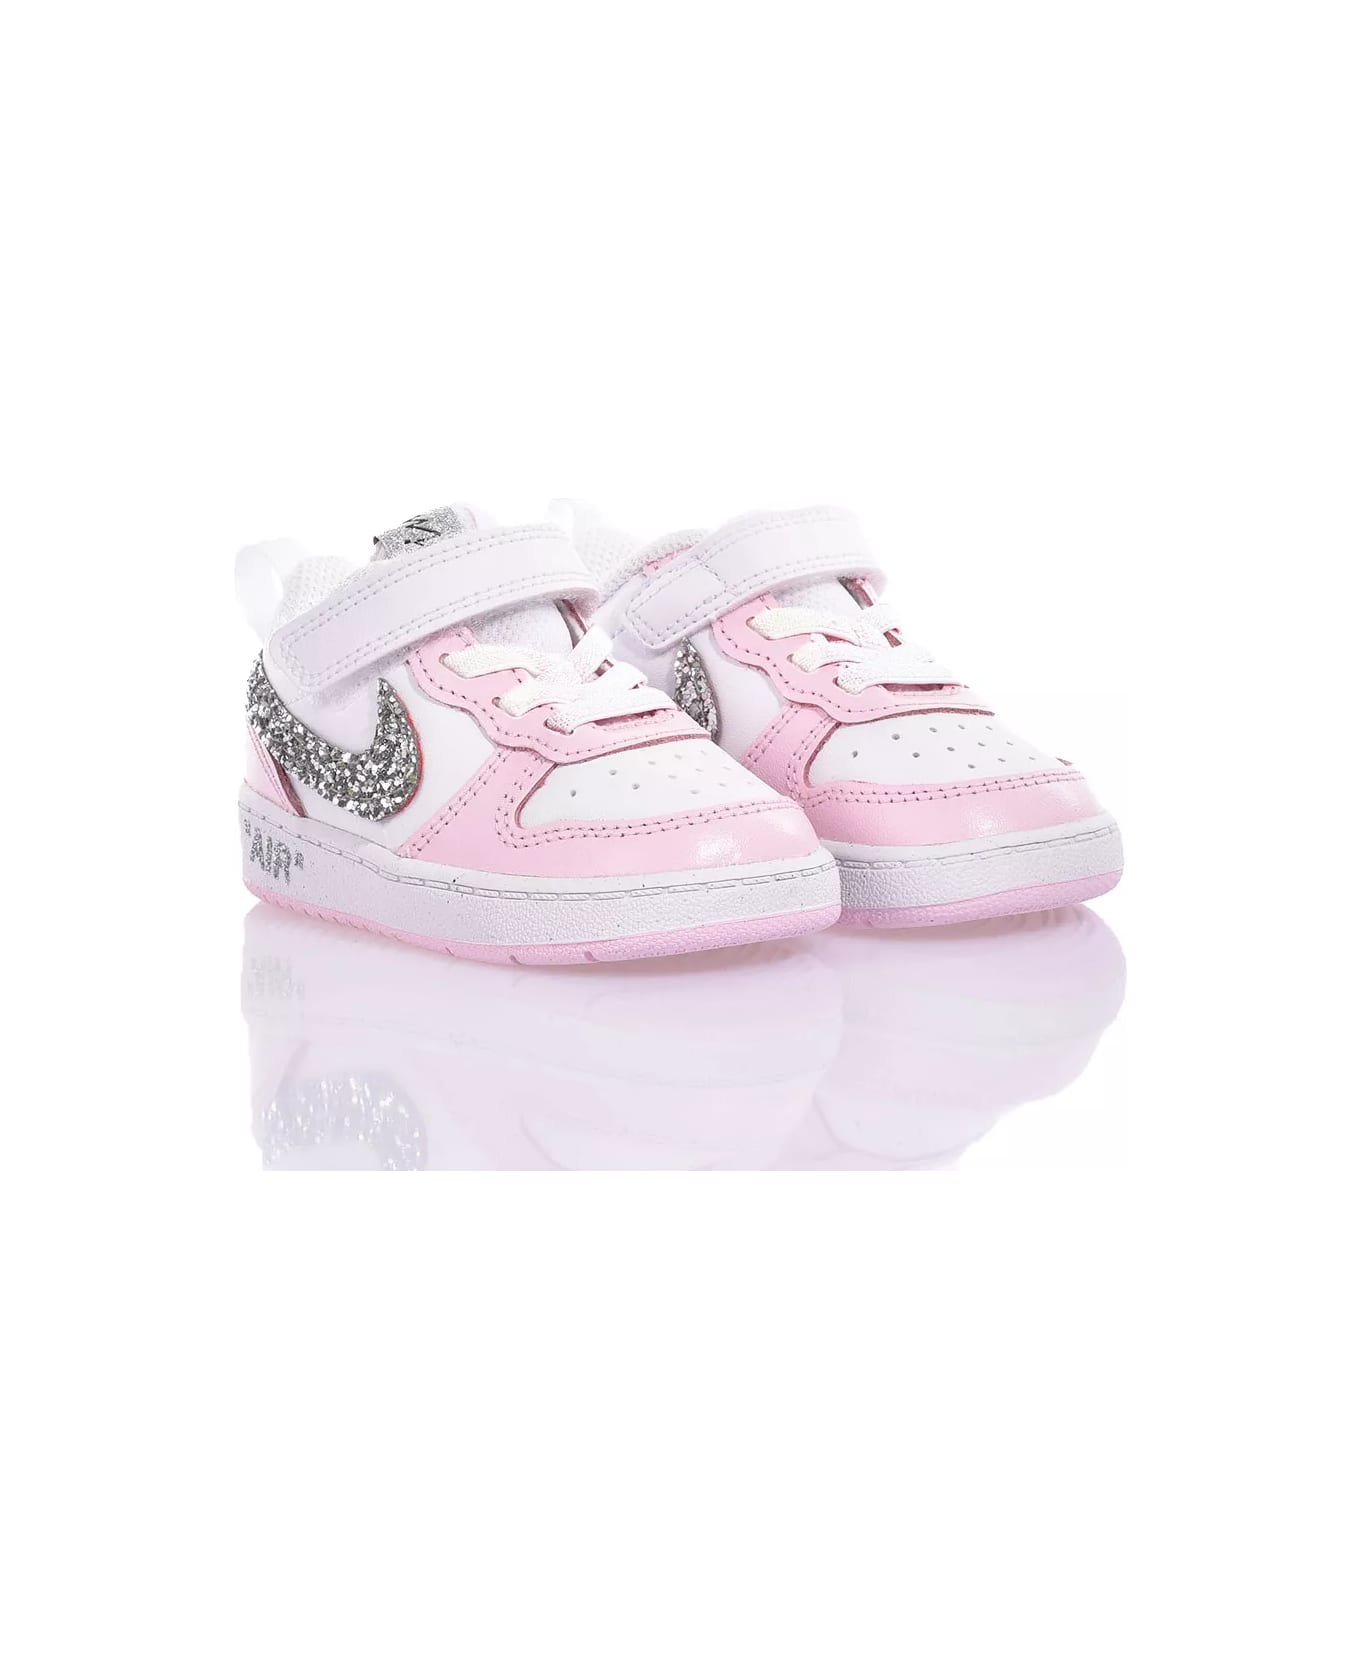 Mimanera Nike Baby Candy Glitter Custom シューズ